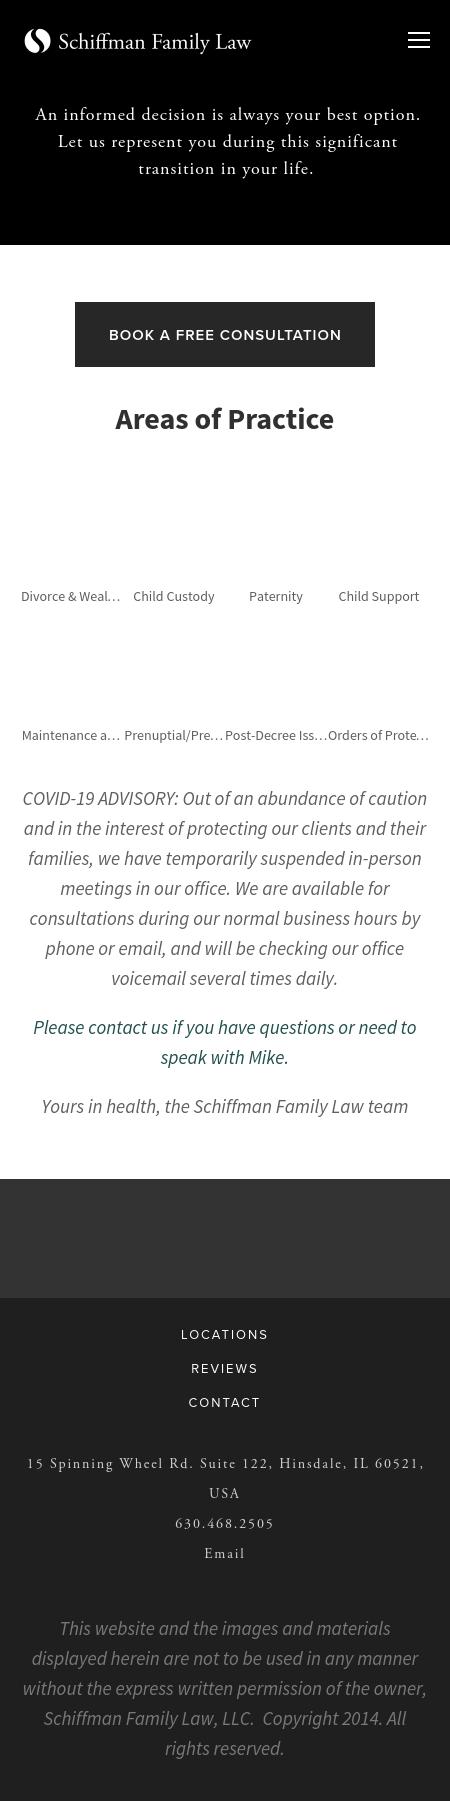 Schiffman Family Law, LLC - Hinsdale IL Lawyers